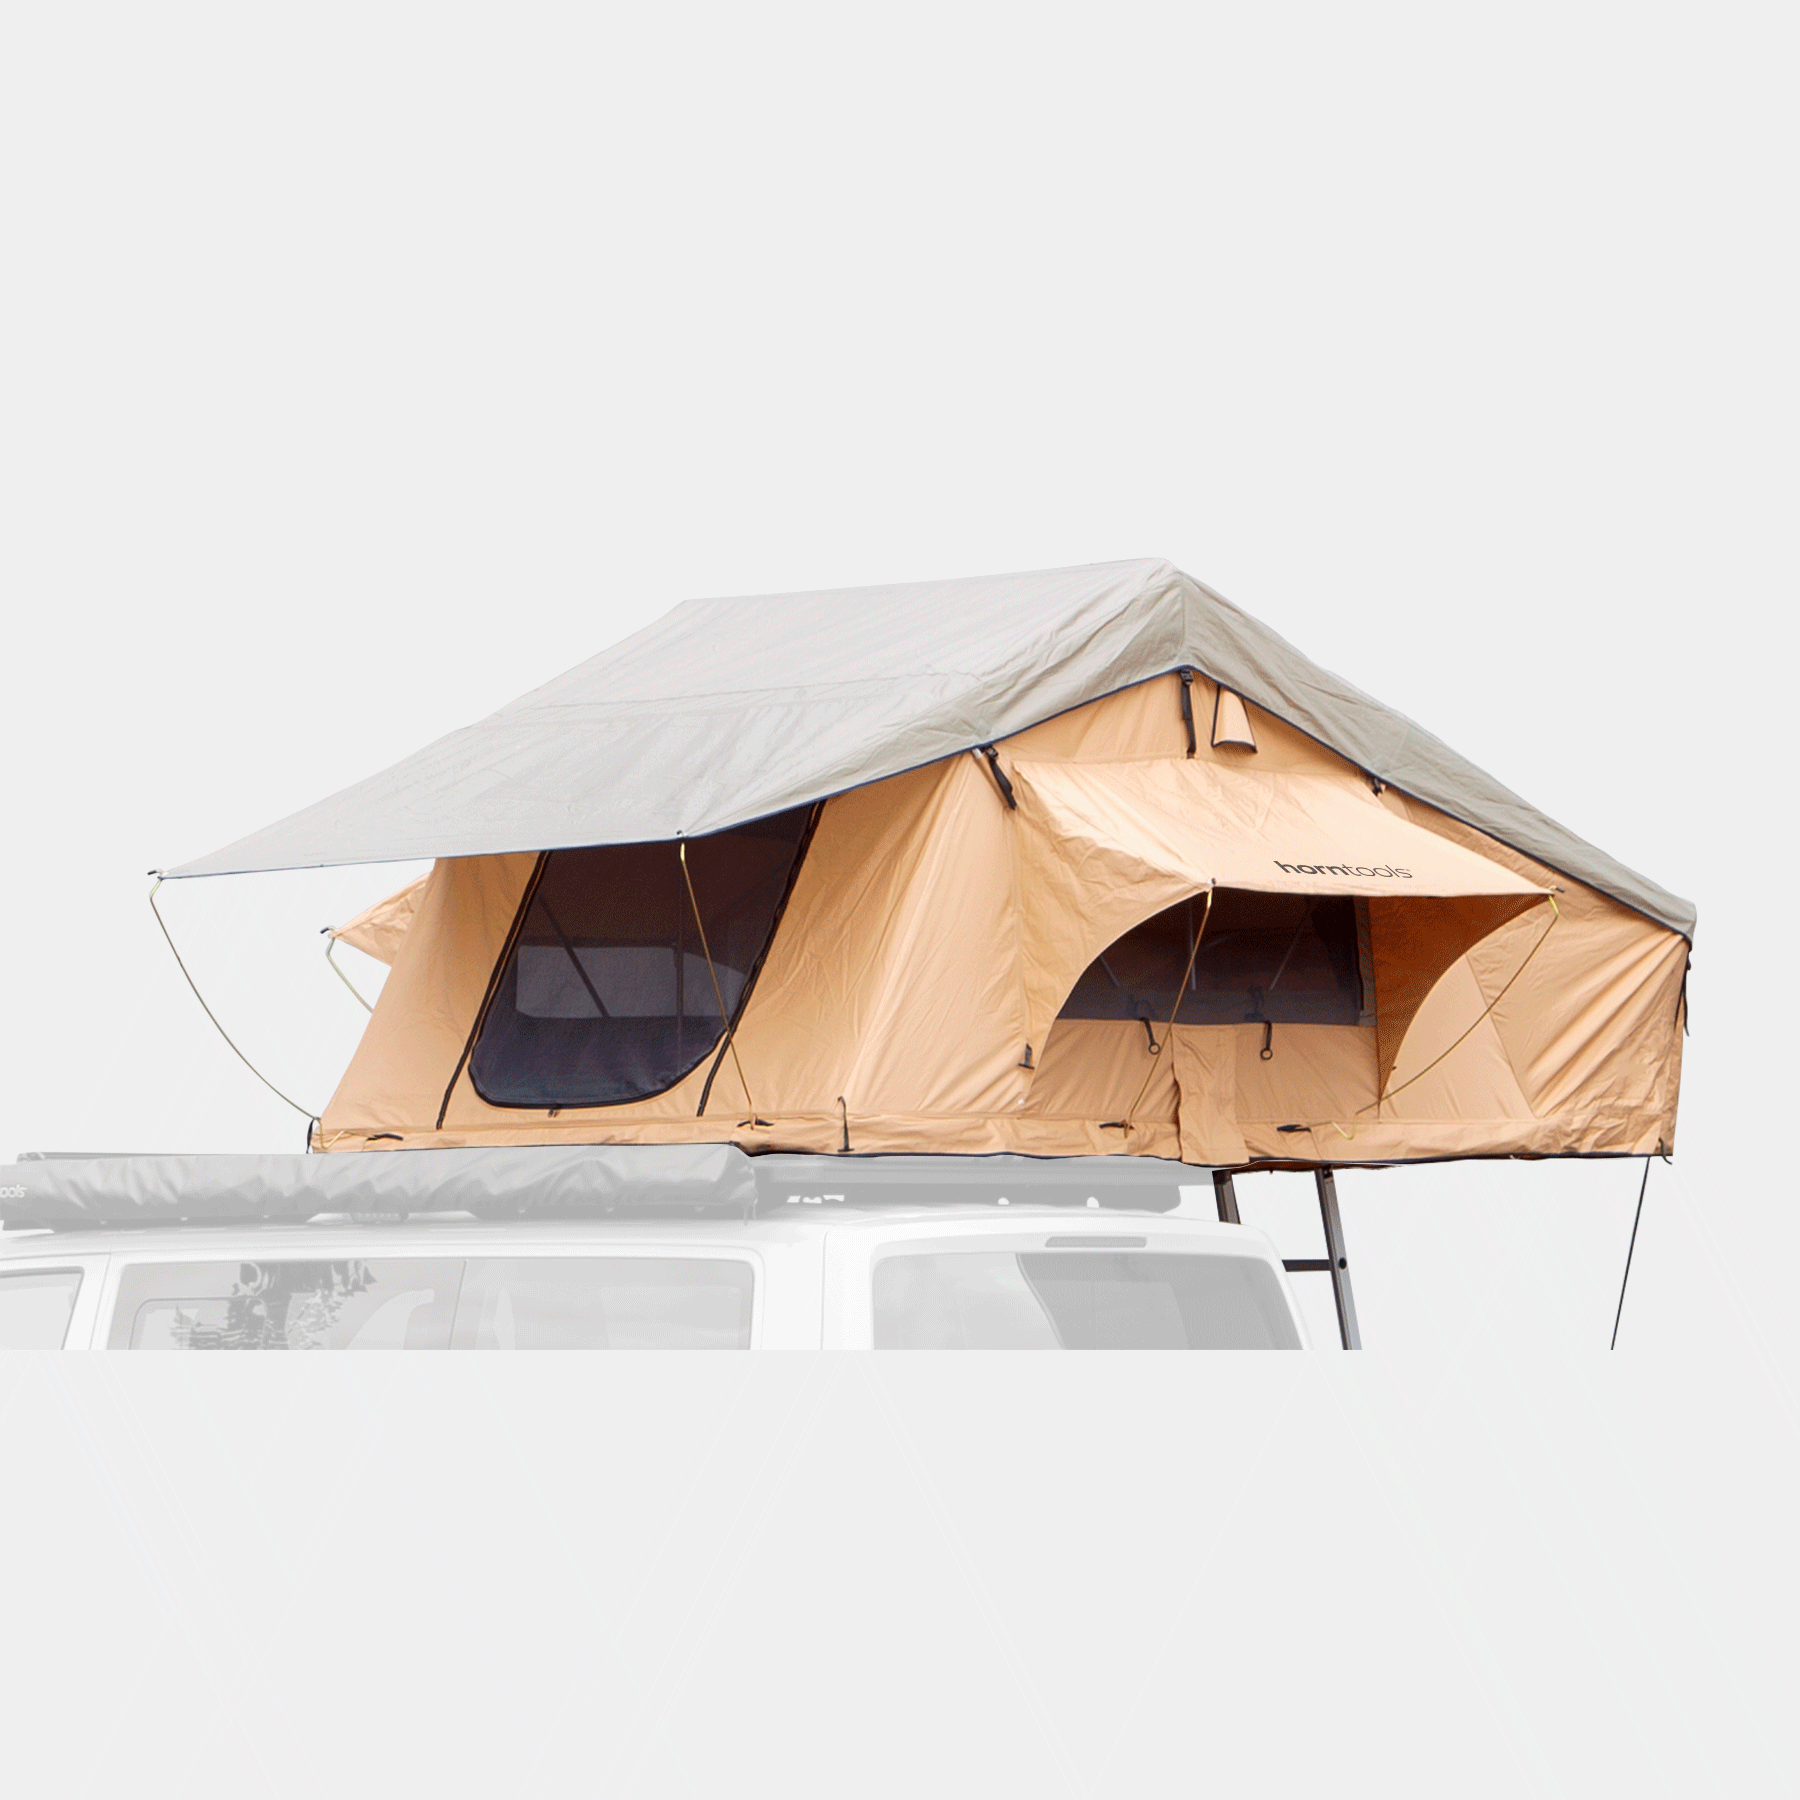 Desert roof tent - three sizes